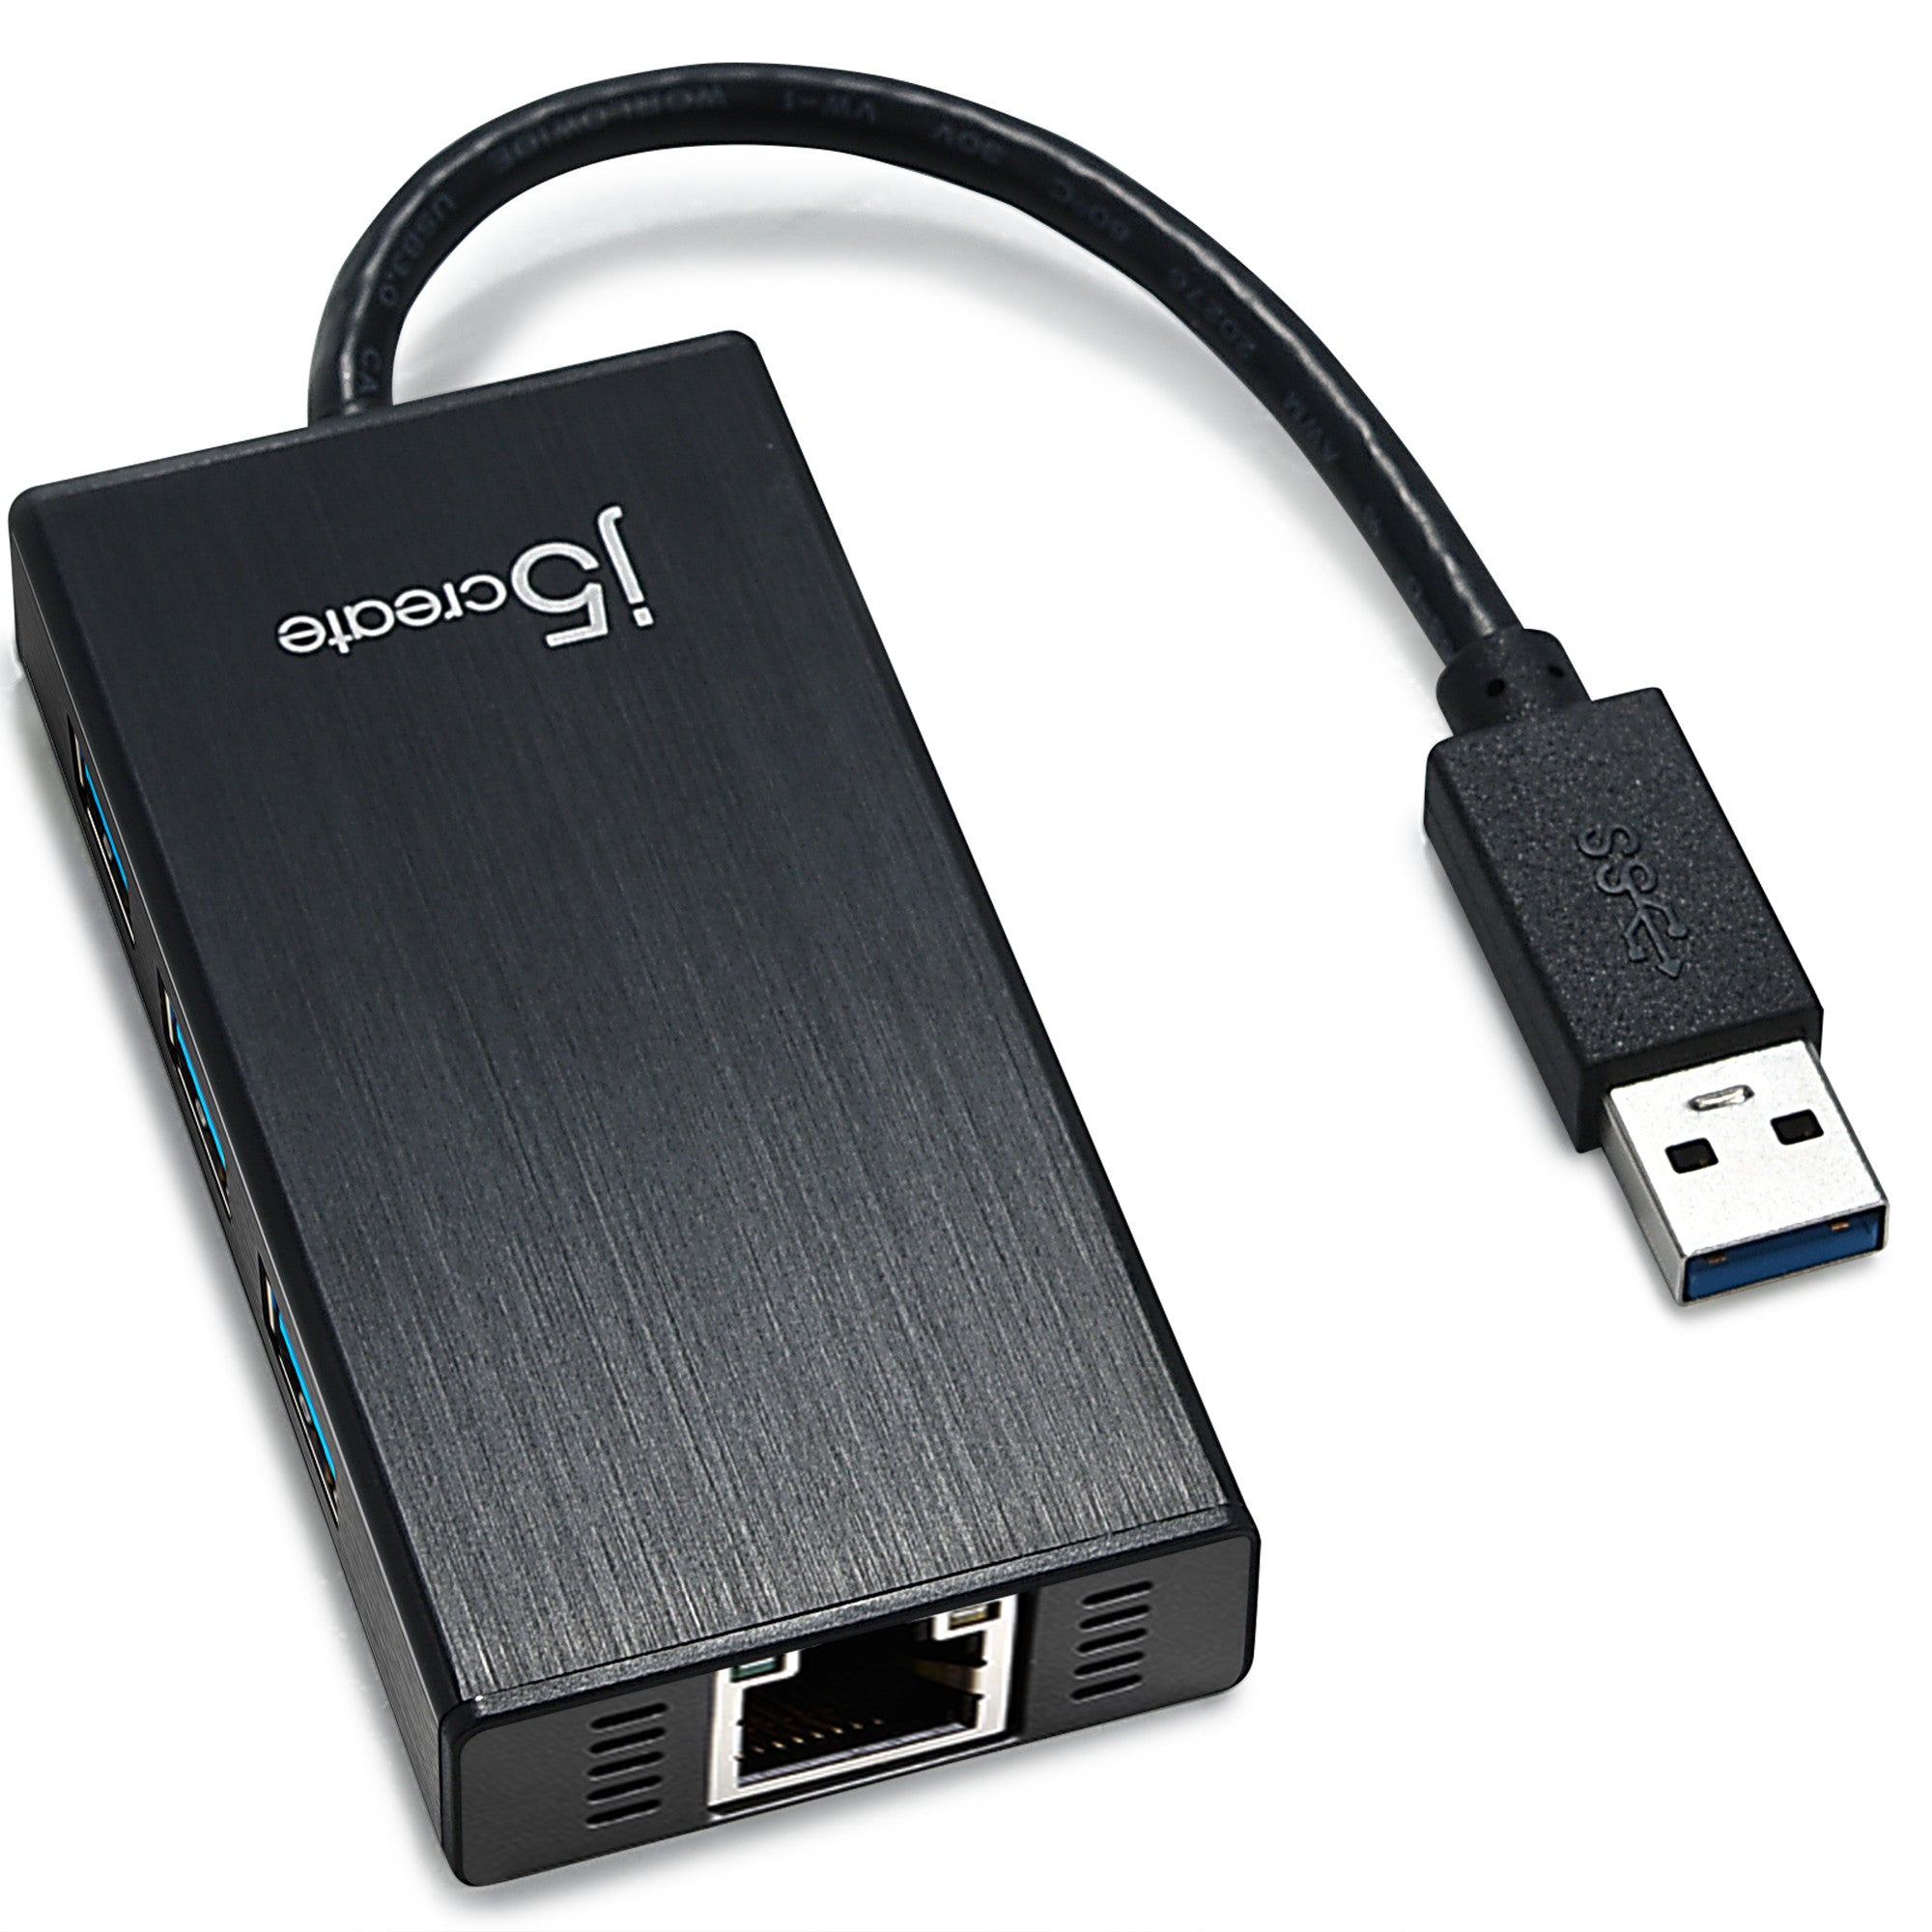 USB C to USB Hub 4 Port, JoyReken Type C to USB Adapter with 4 USB 3.0  Ports, Thunderbolt 3 to Multiport USB 3.0 Hub, for MacBook, Mac Pro/Mini,  iMac